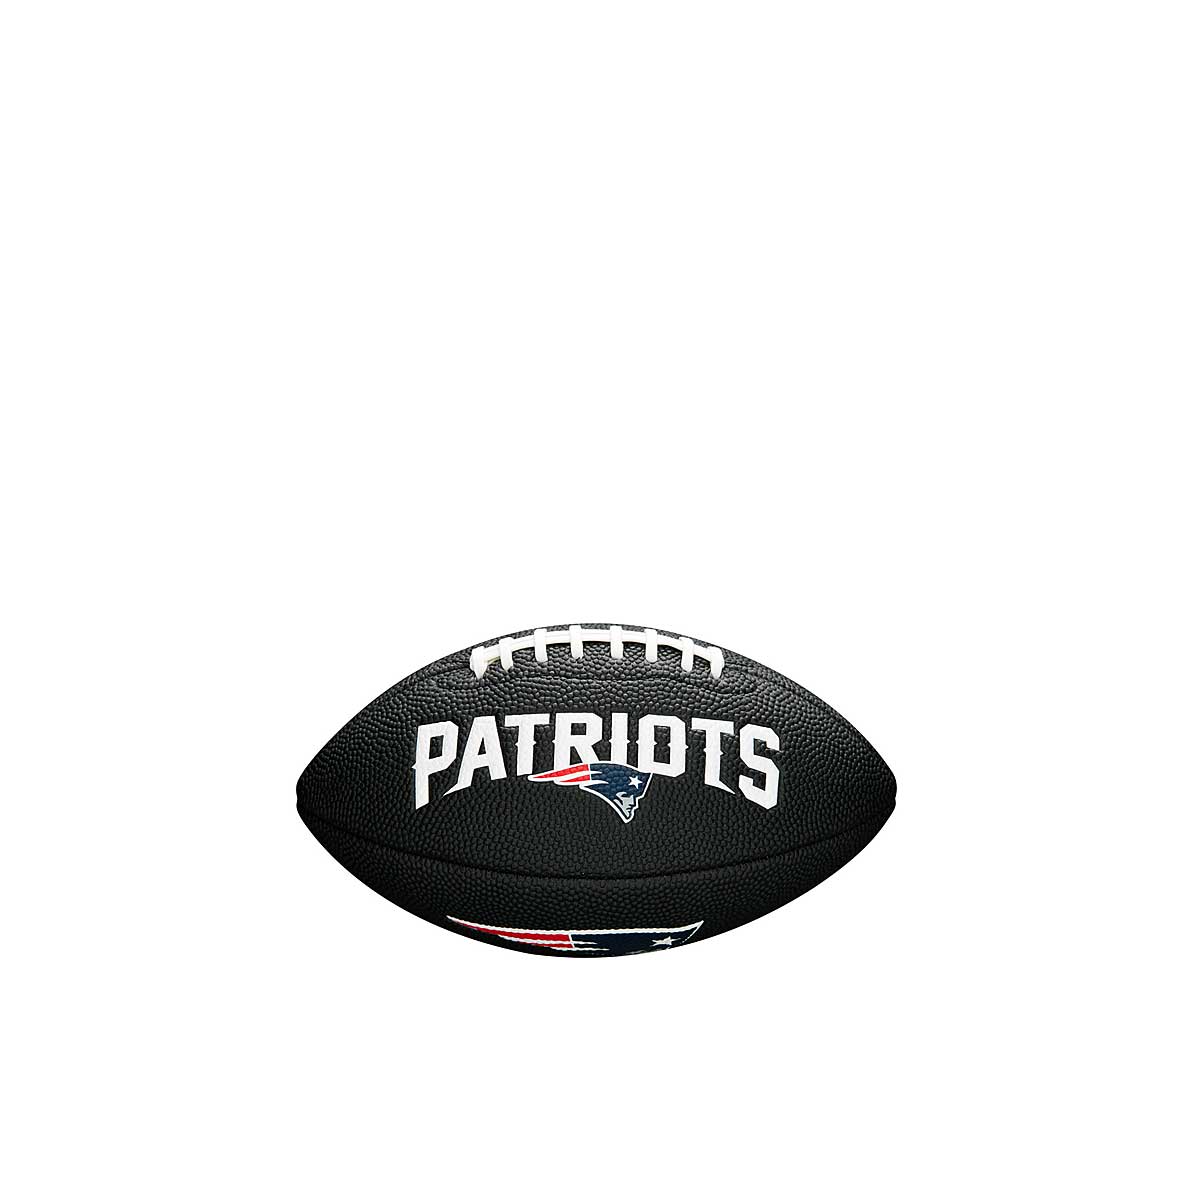 Wilson Nfl Team Soft Touch Football New England Patriots, Black/